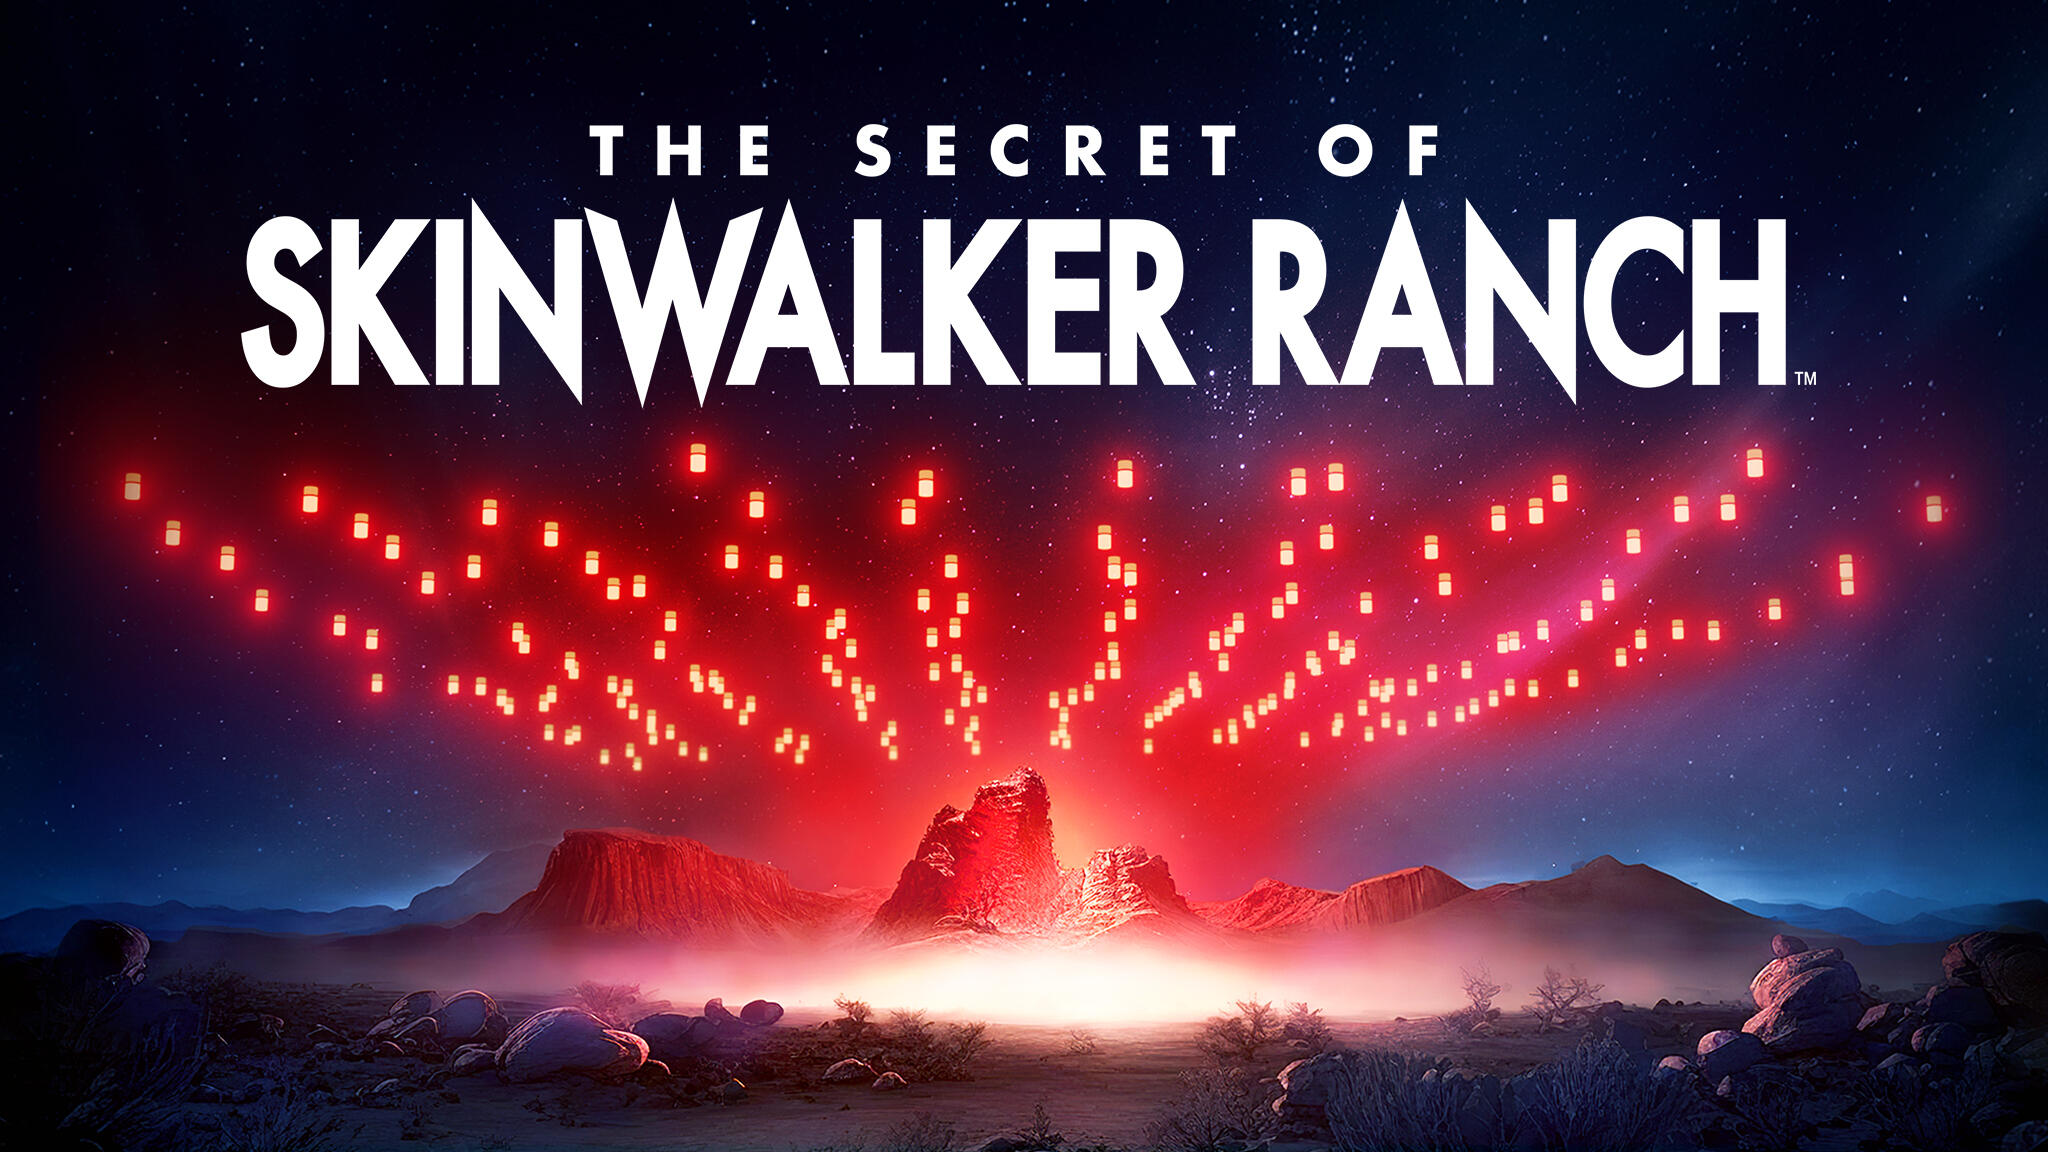 Skinwalker ranch season 4 episode 5